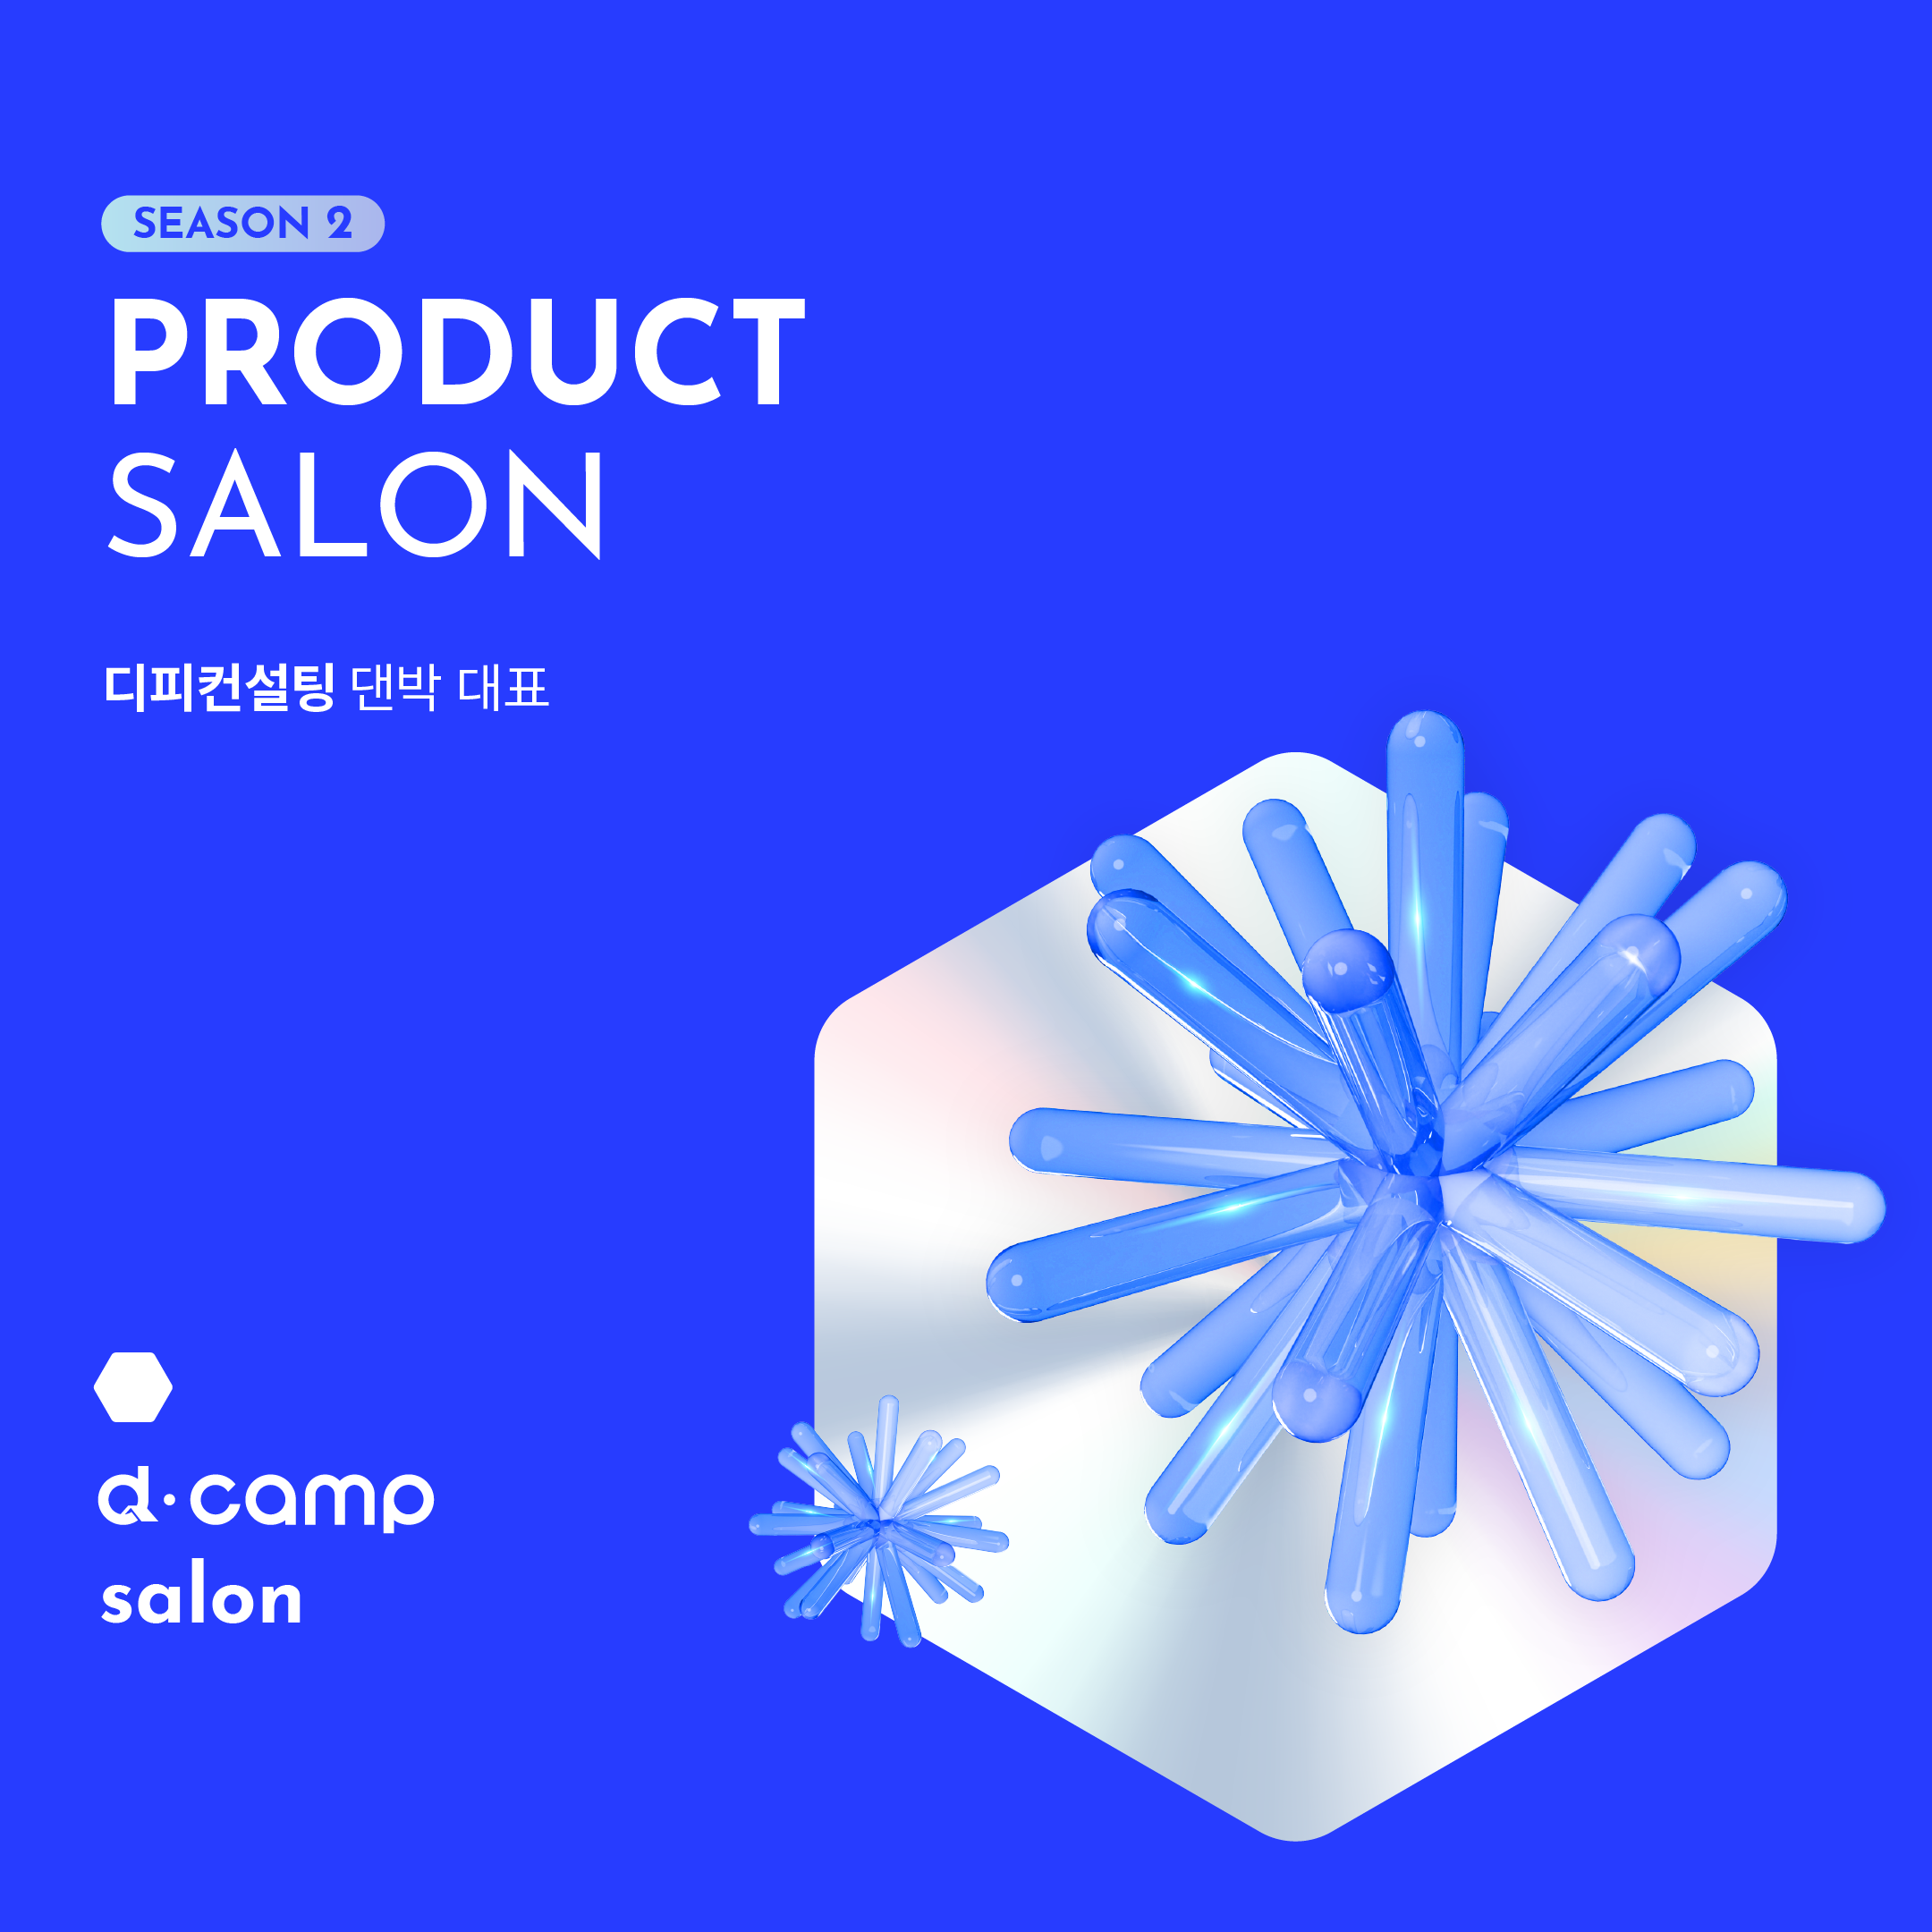 d·camp product salon season.2 의 웹포스터